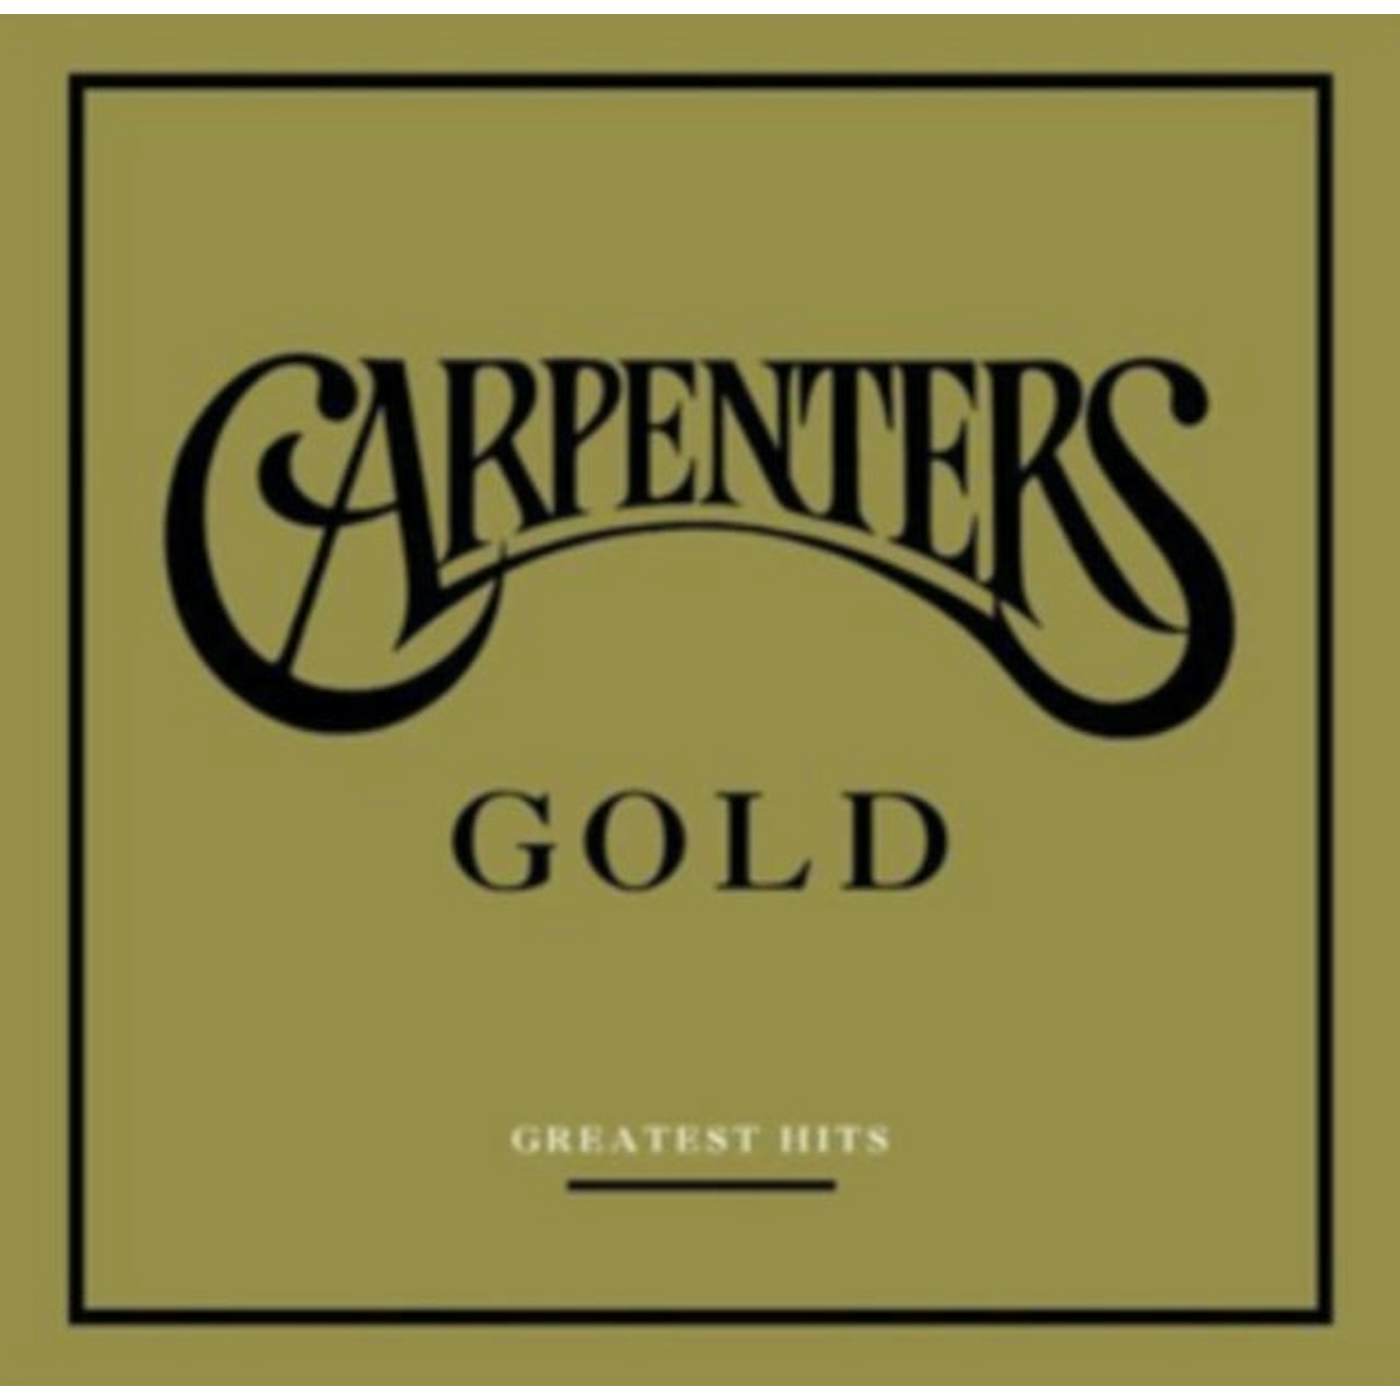 Carpenters CD - Carpenters Gold